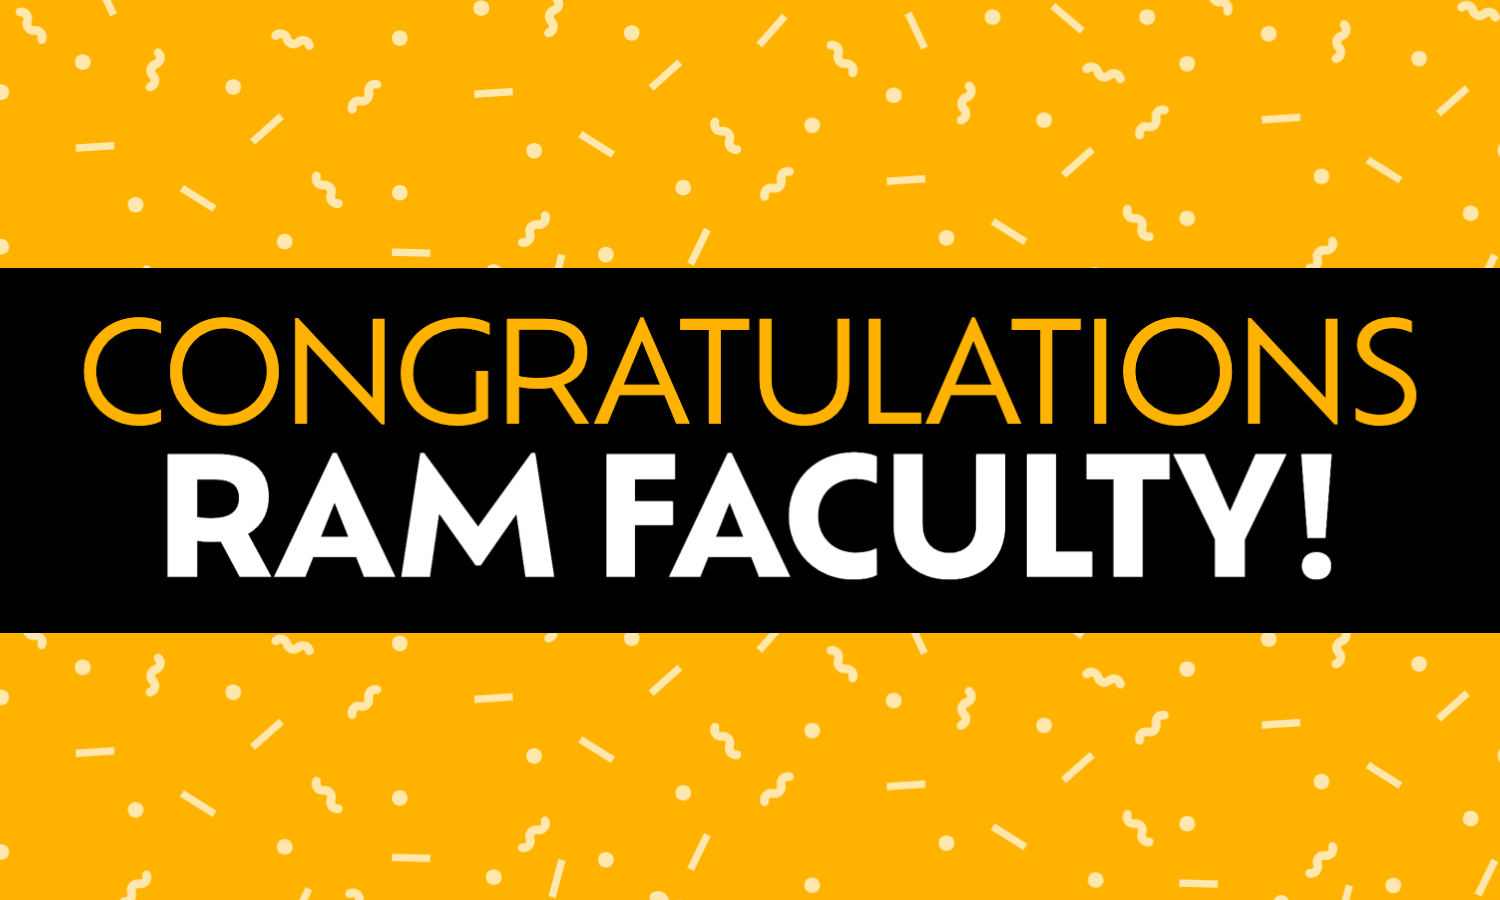 Congratulations ram faculty